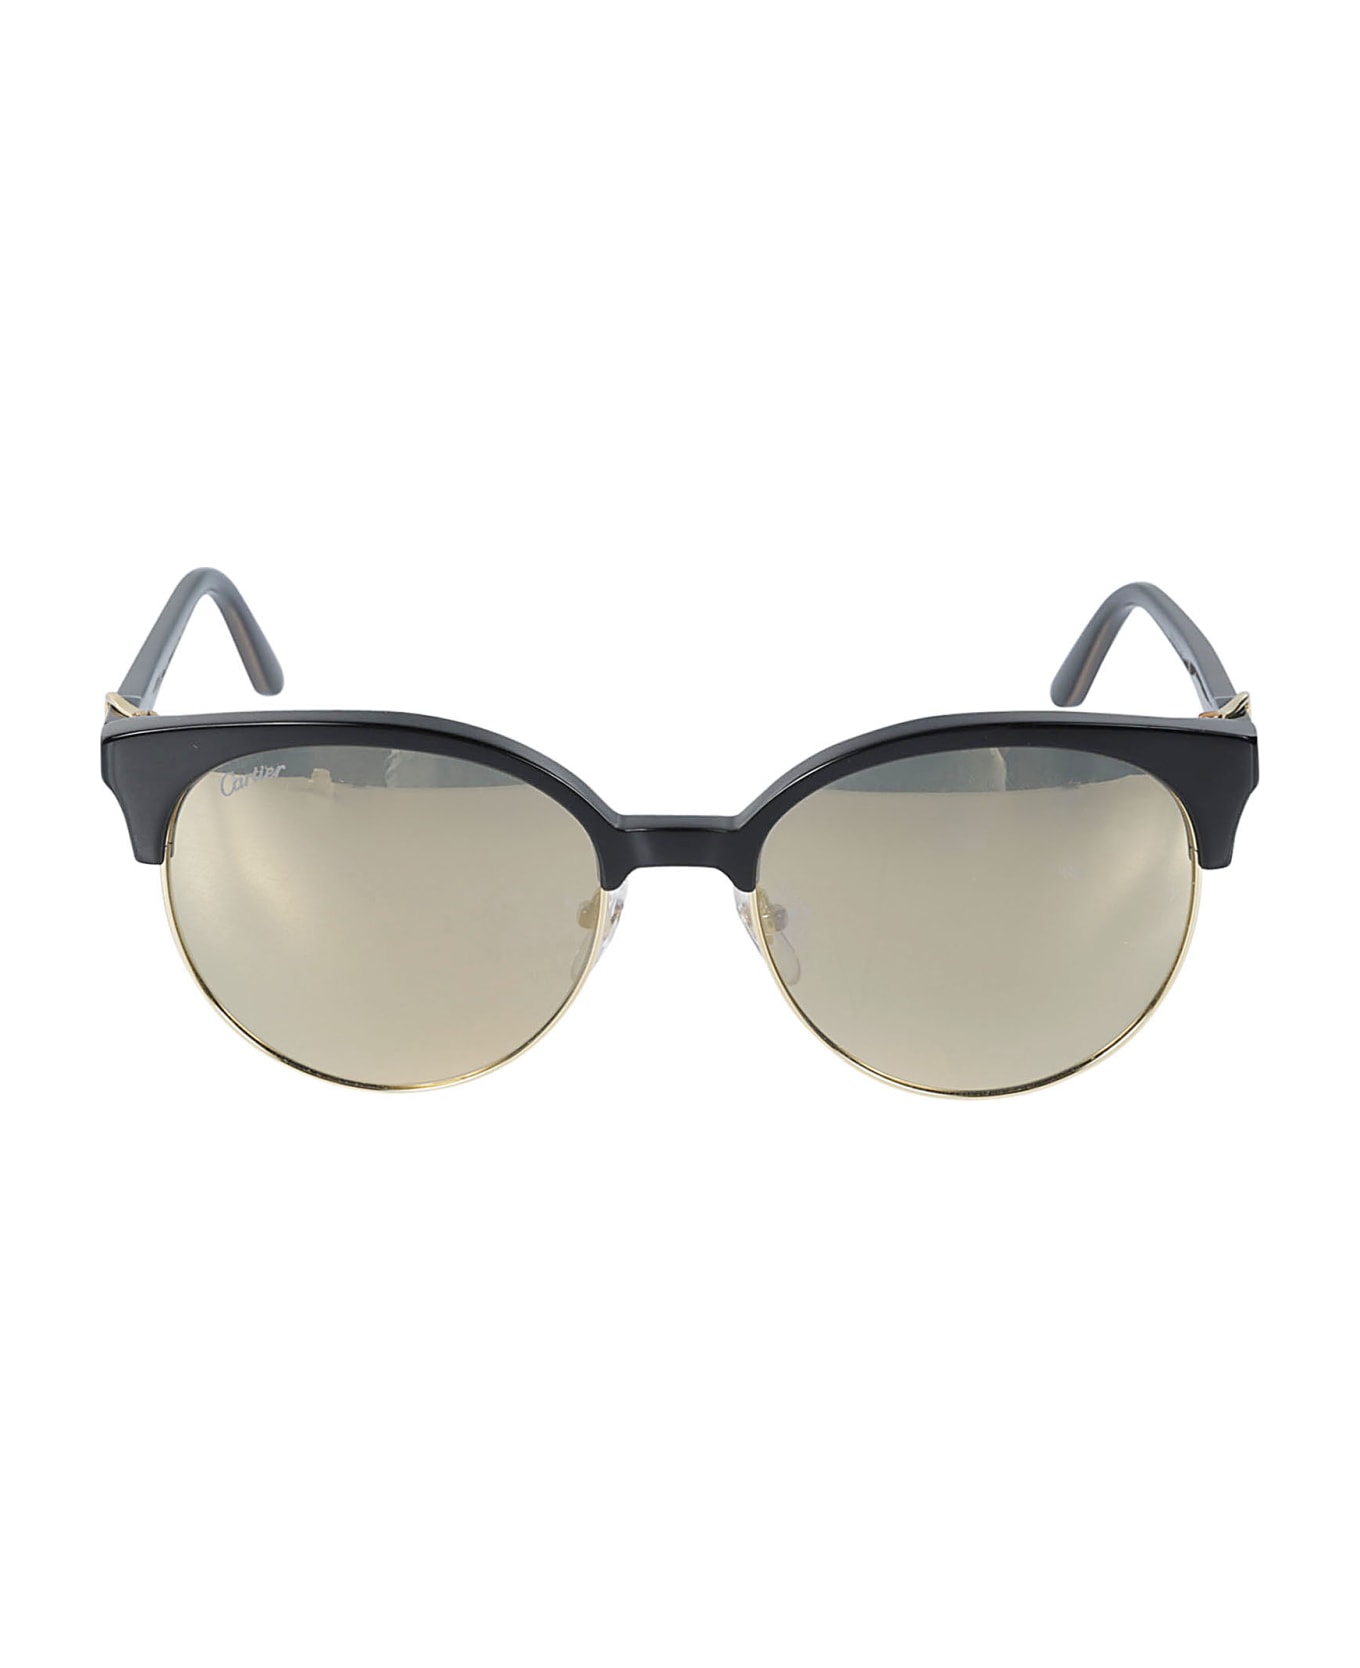 Cartier Eyewear Clubmaster Style Sunglasses - Black サングラス